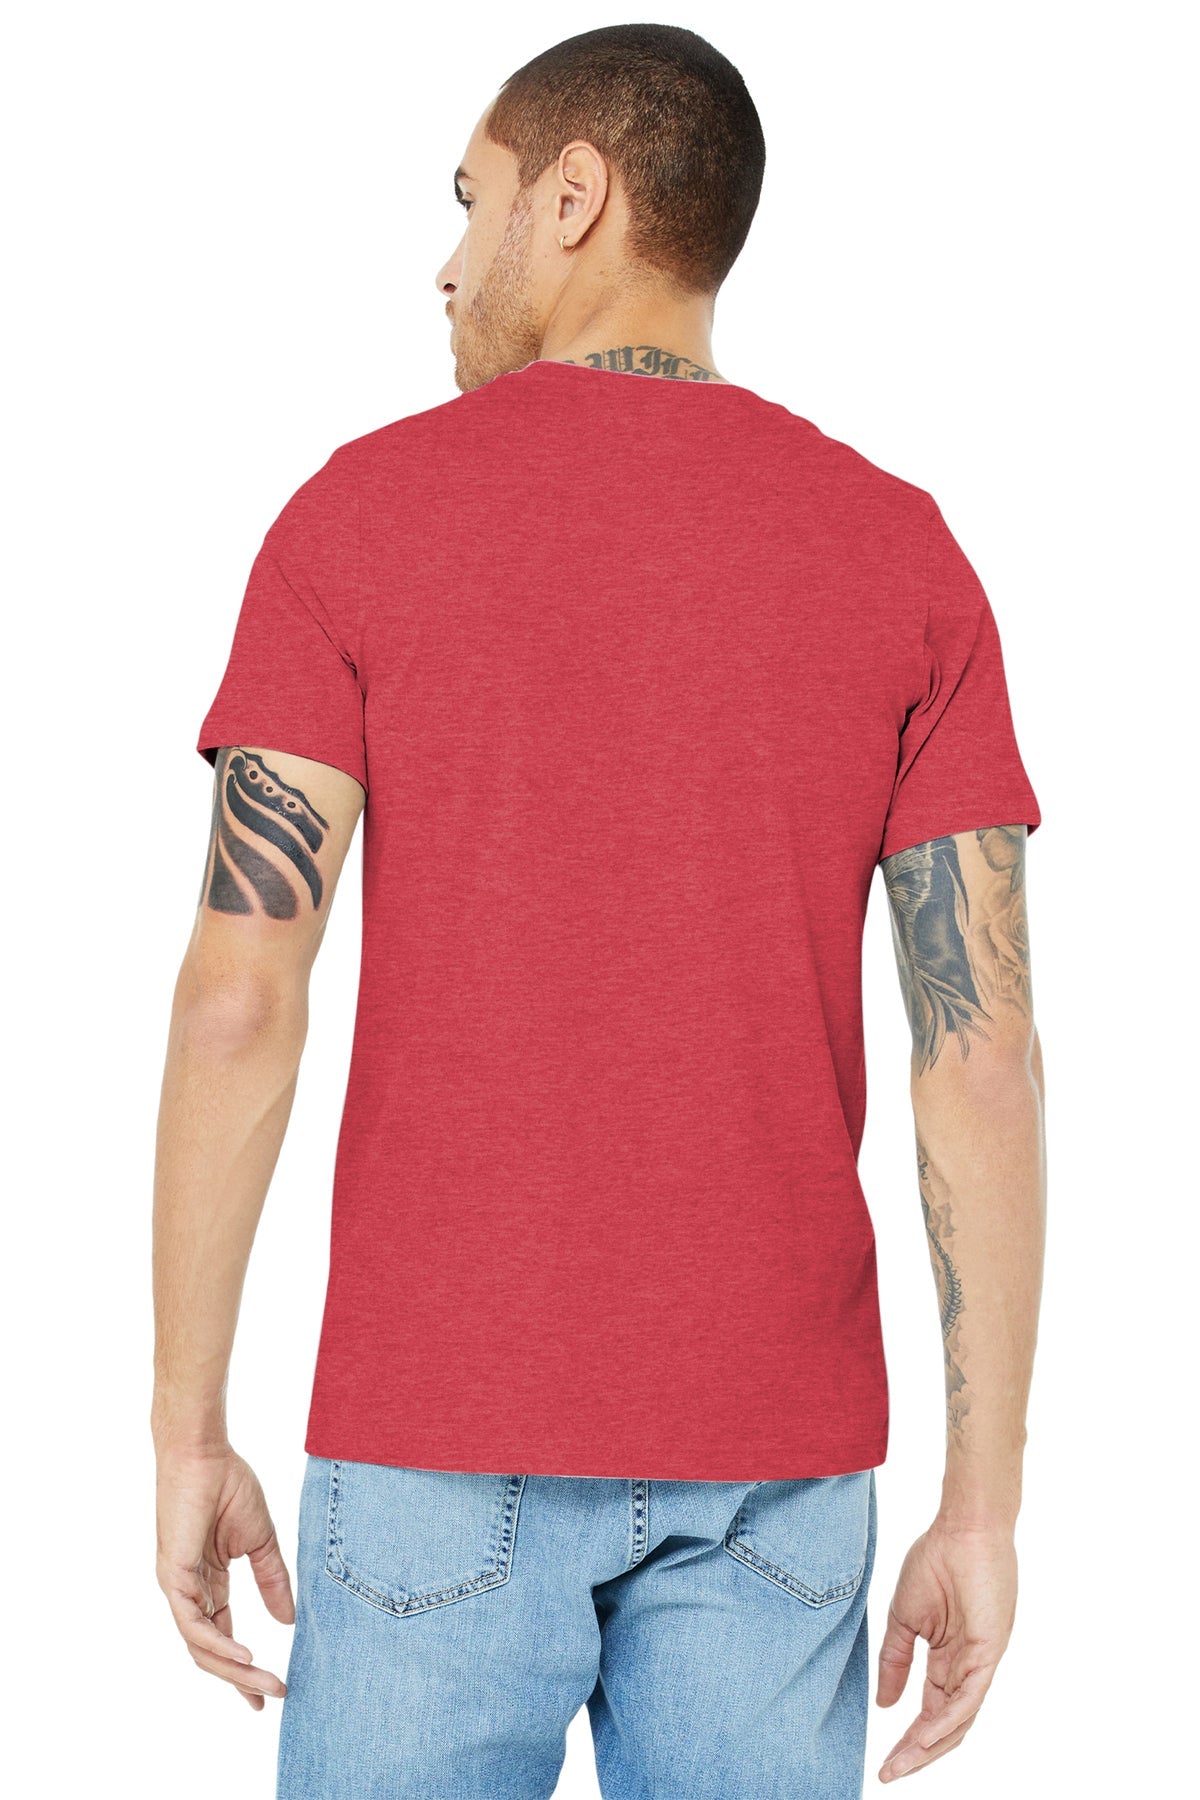 bella + canvas unisex jersey short sleeve t-shirt 3001c heather red